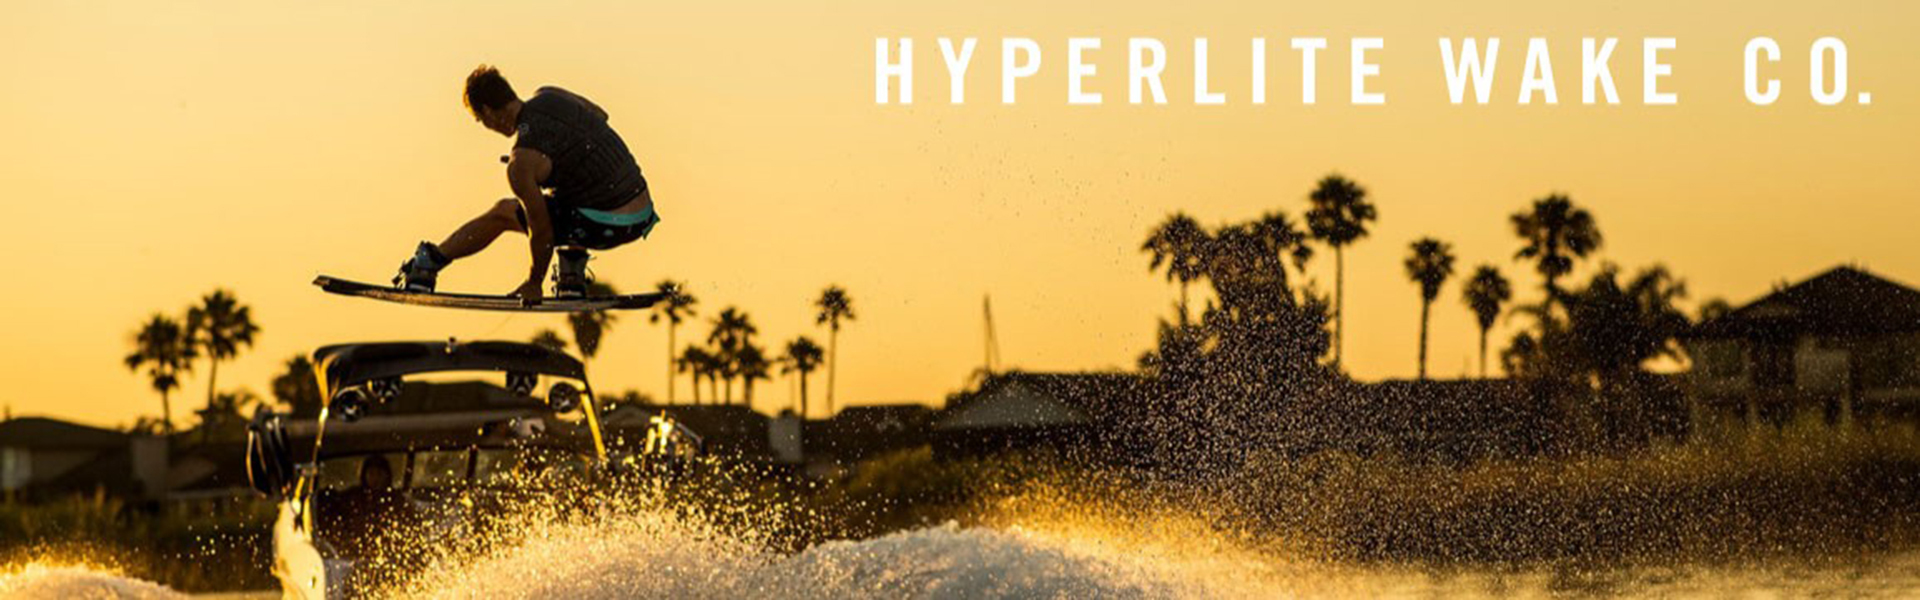 hyperlite-brand-page-banner.jpg